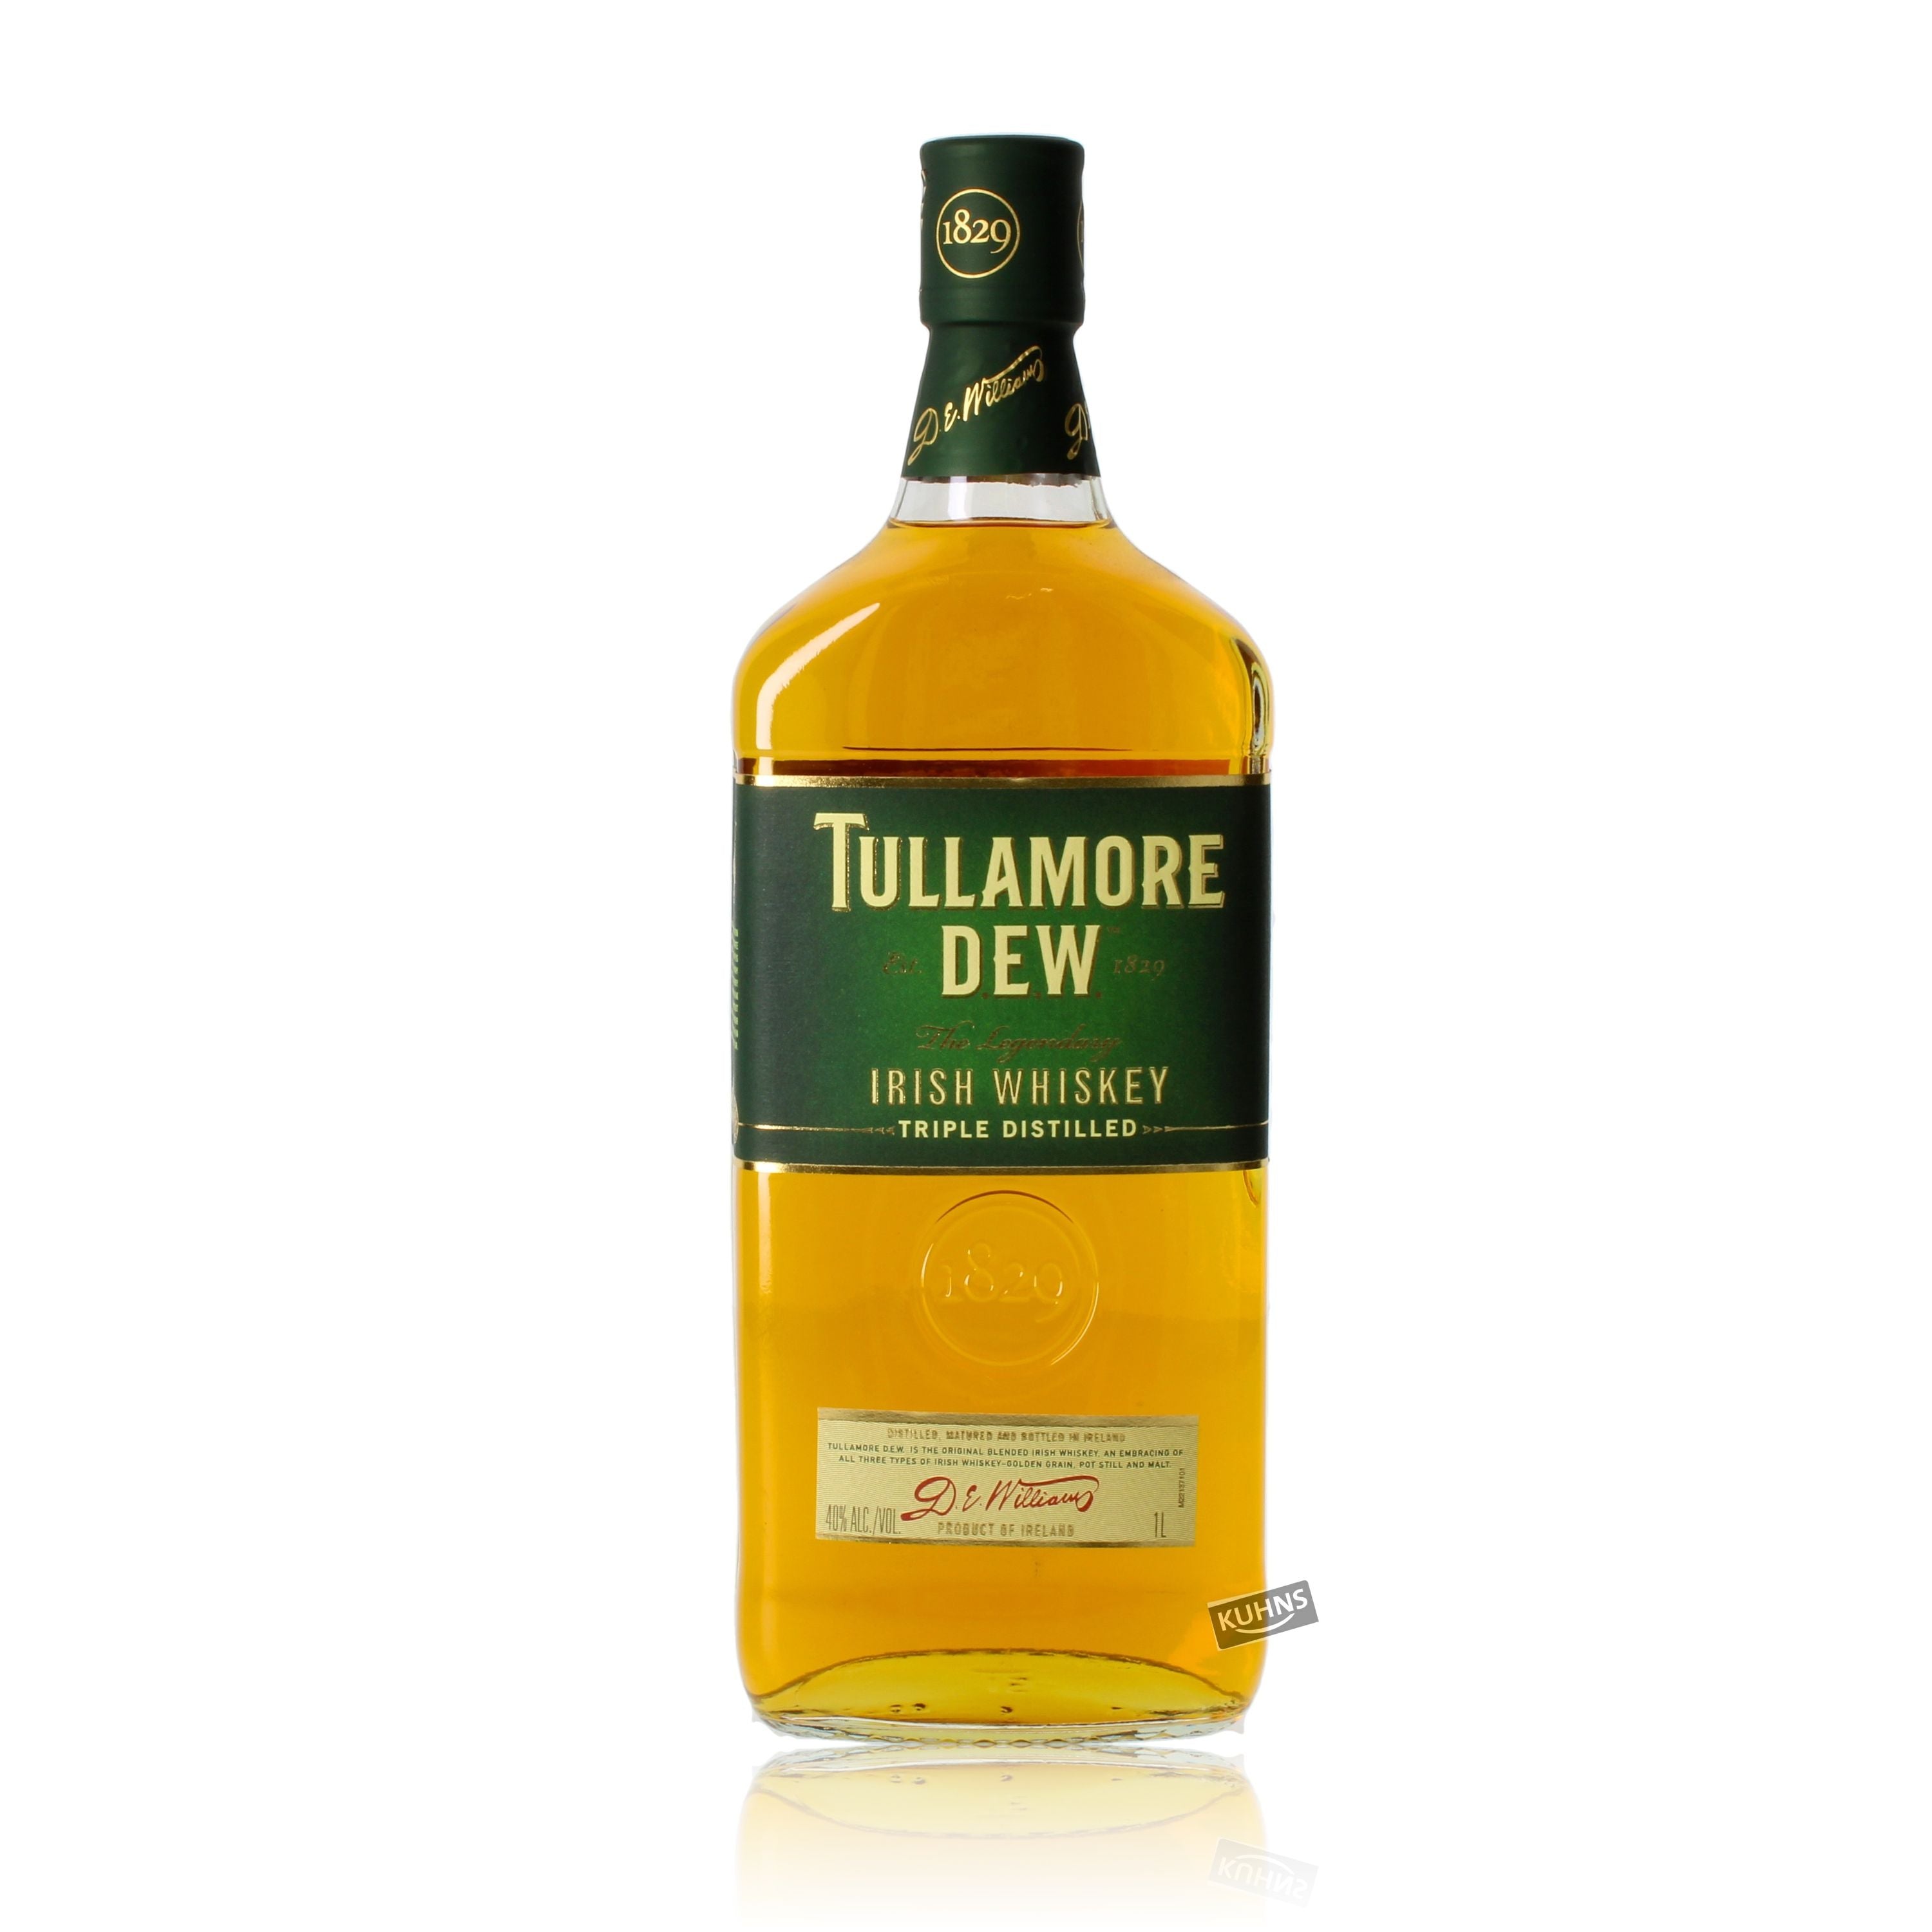 Tullamore Dew Irish Whiskey 1.0l, alc. 40% by volume